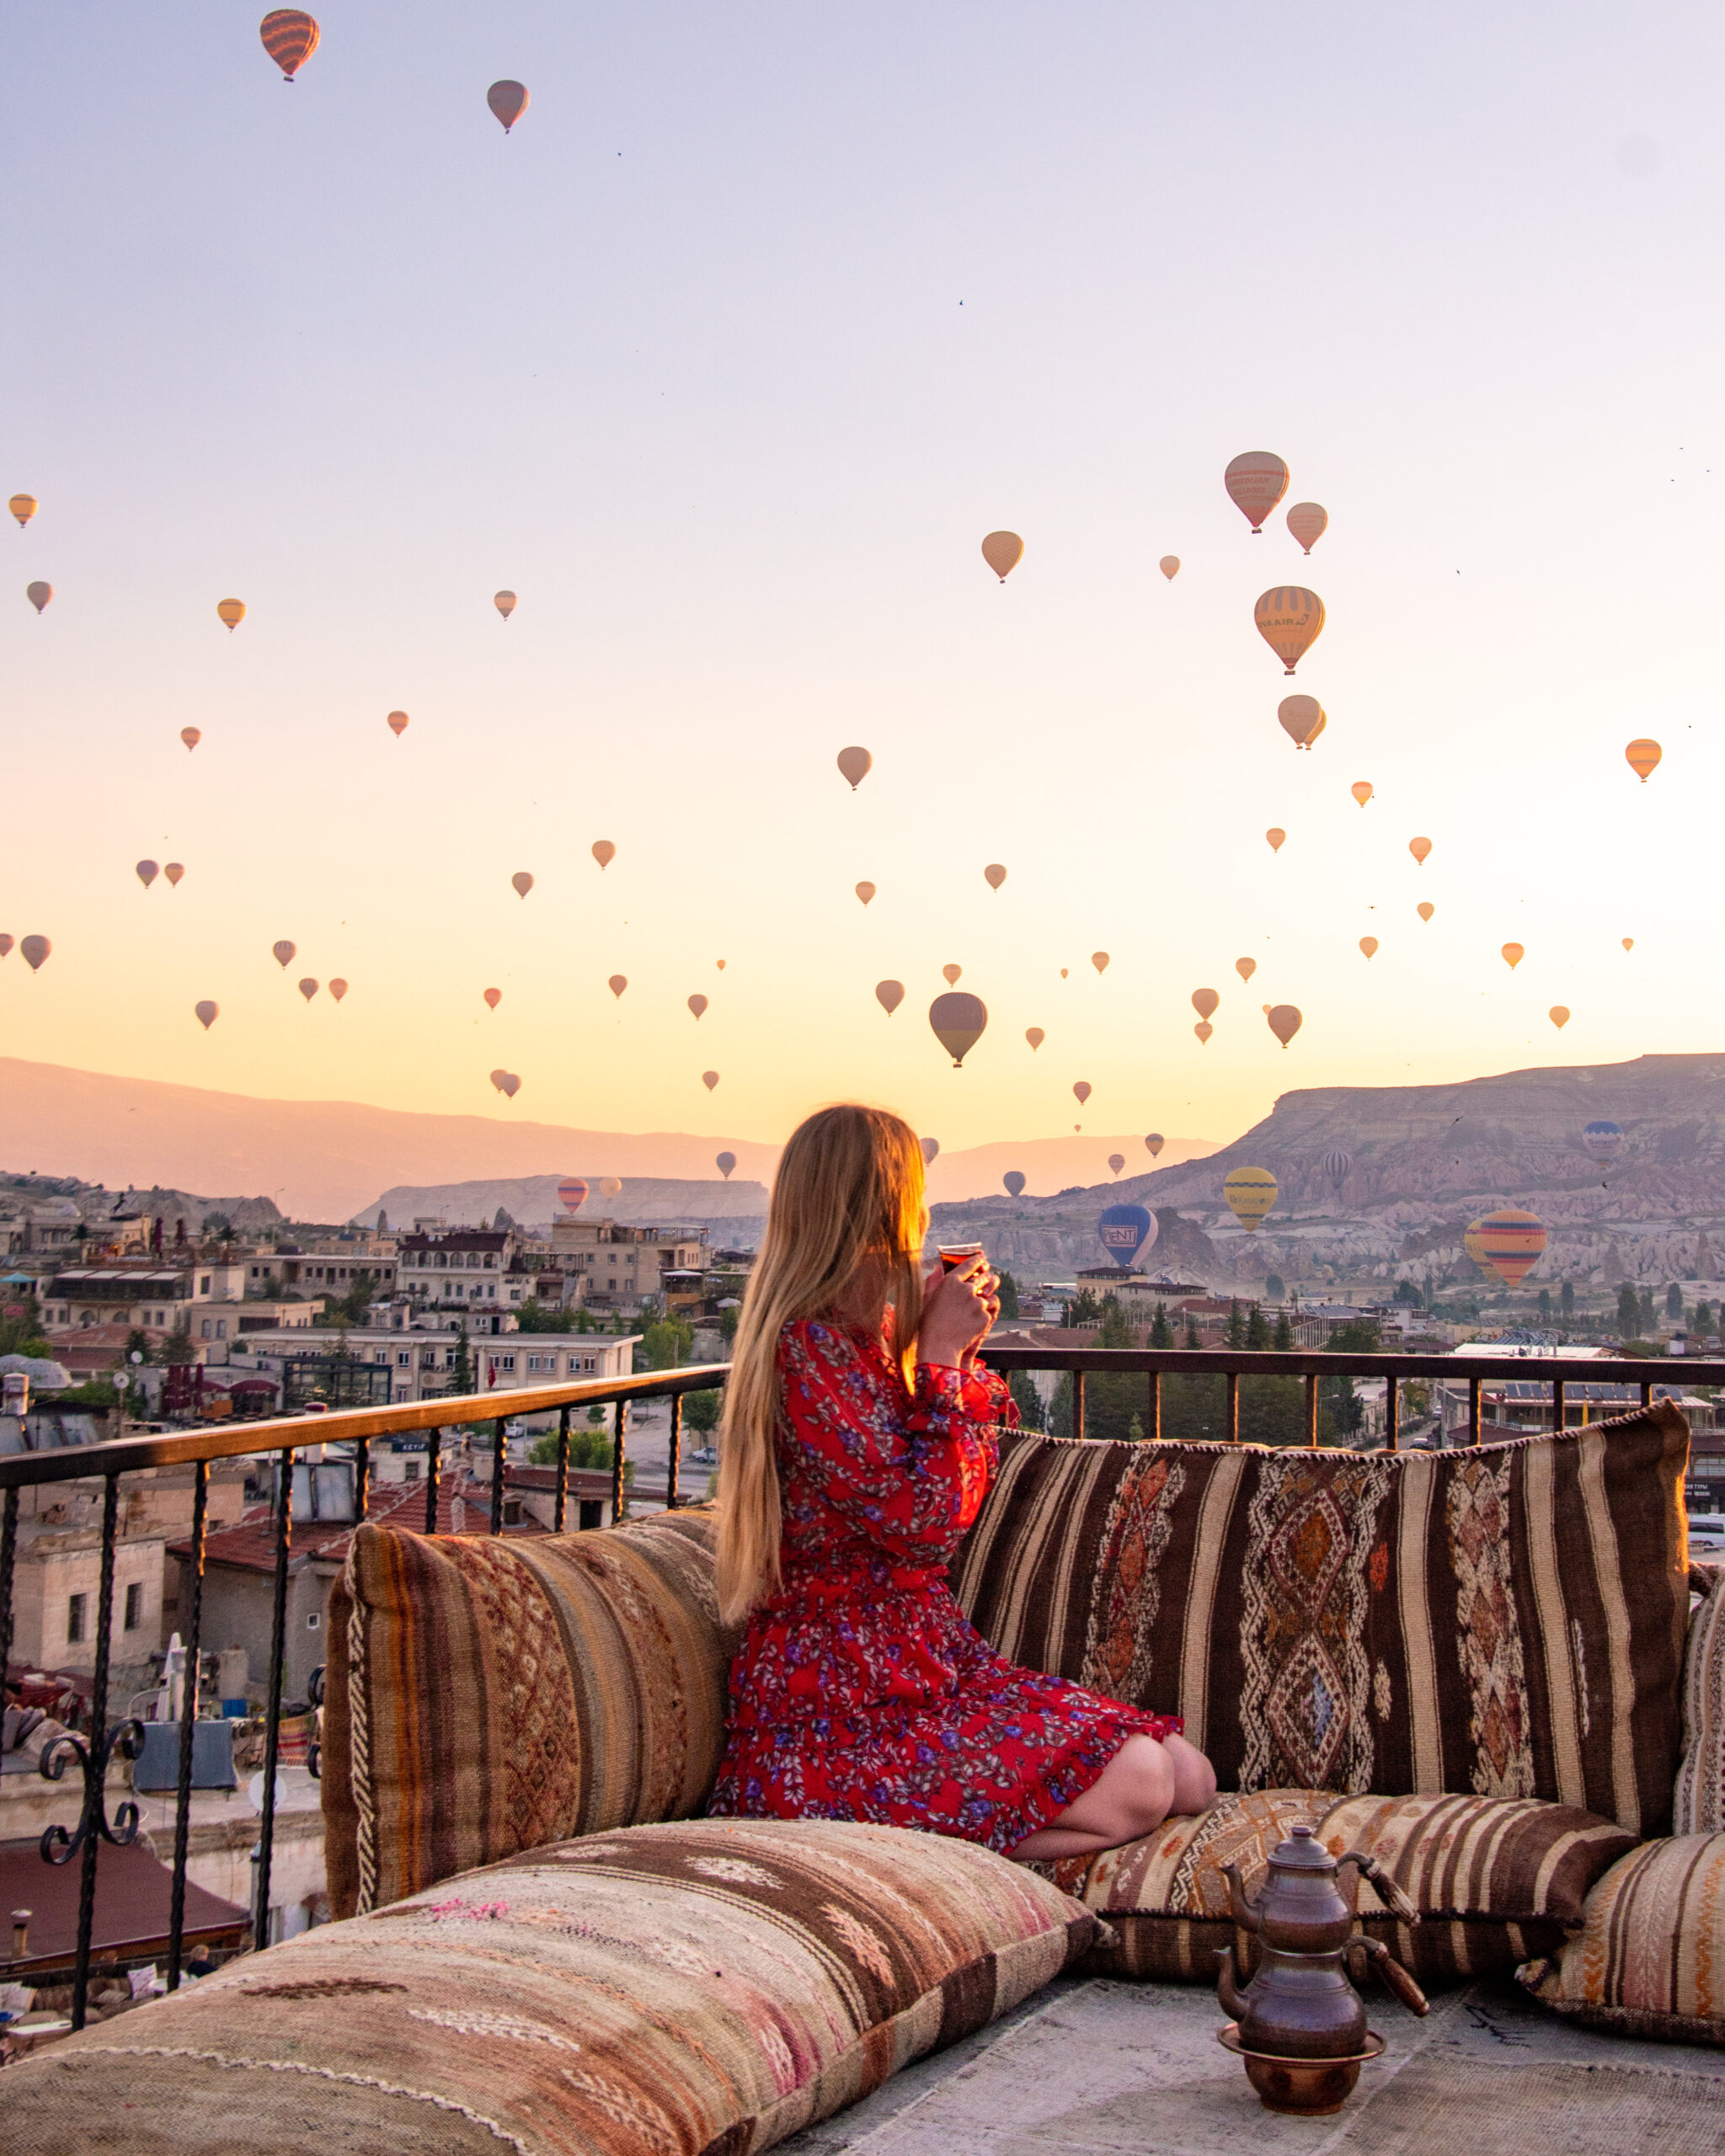 Cappadocia Balloons Sunrise Turkey Sarah Latham